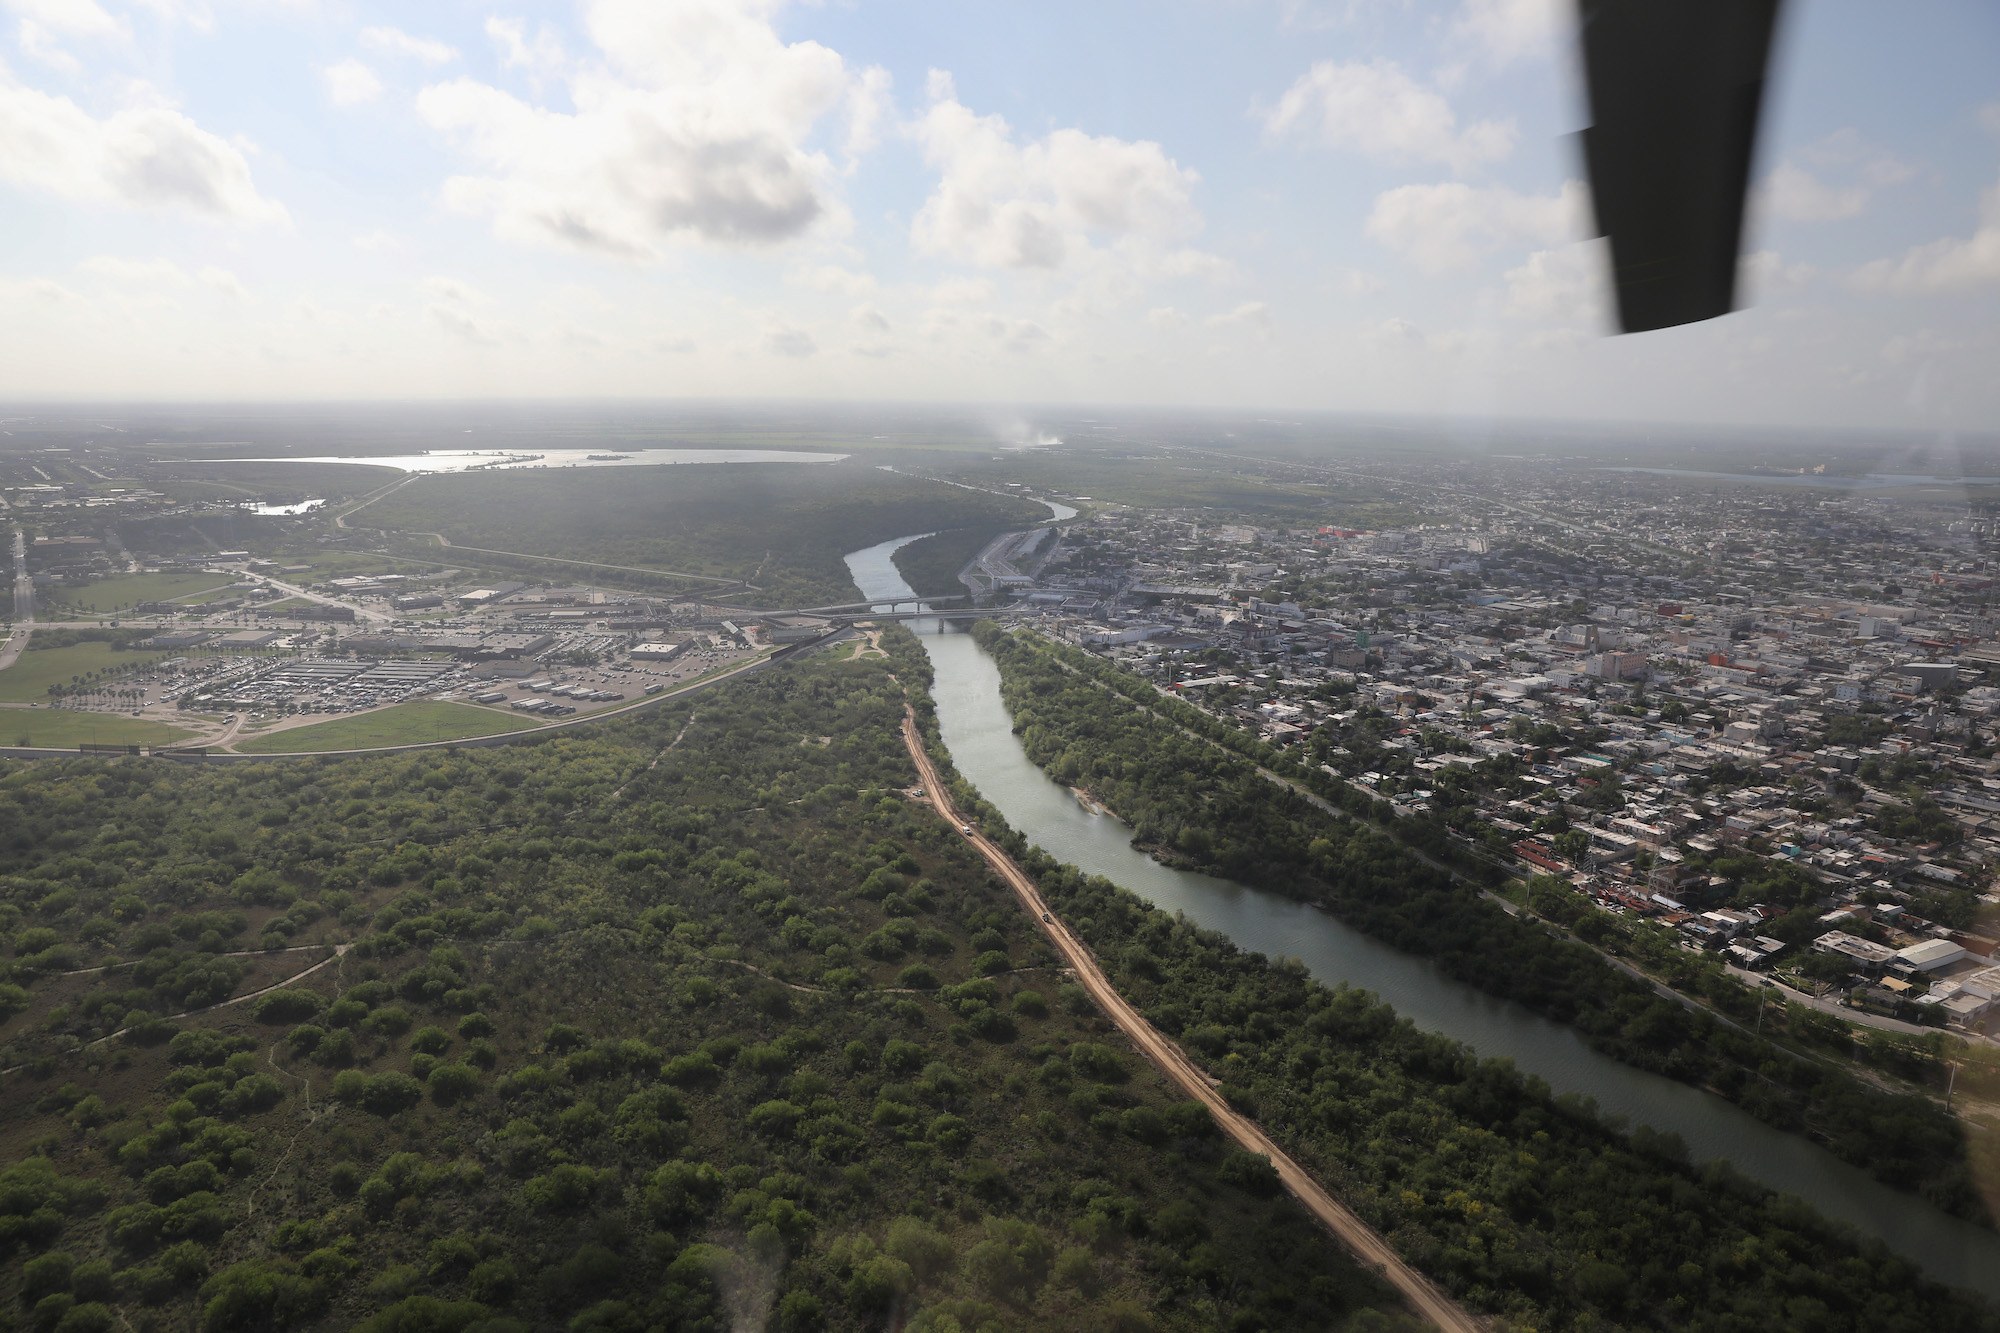 The Rio Grande flows under an international crossing between Hidalgo, Texas and Reynosa, Mexico